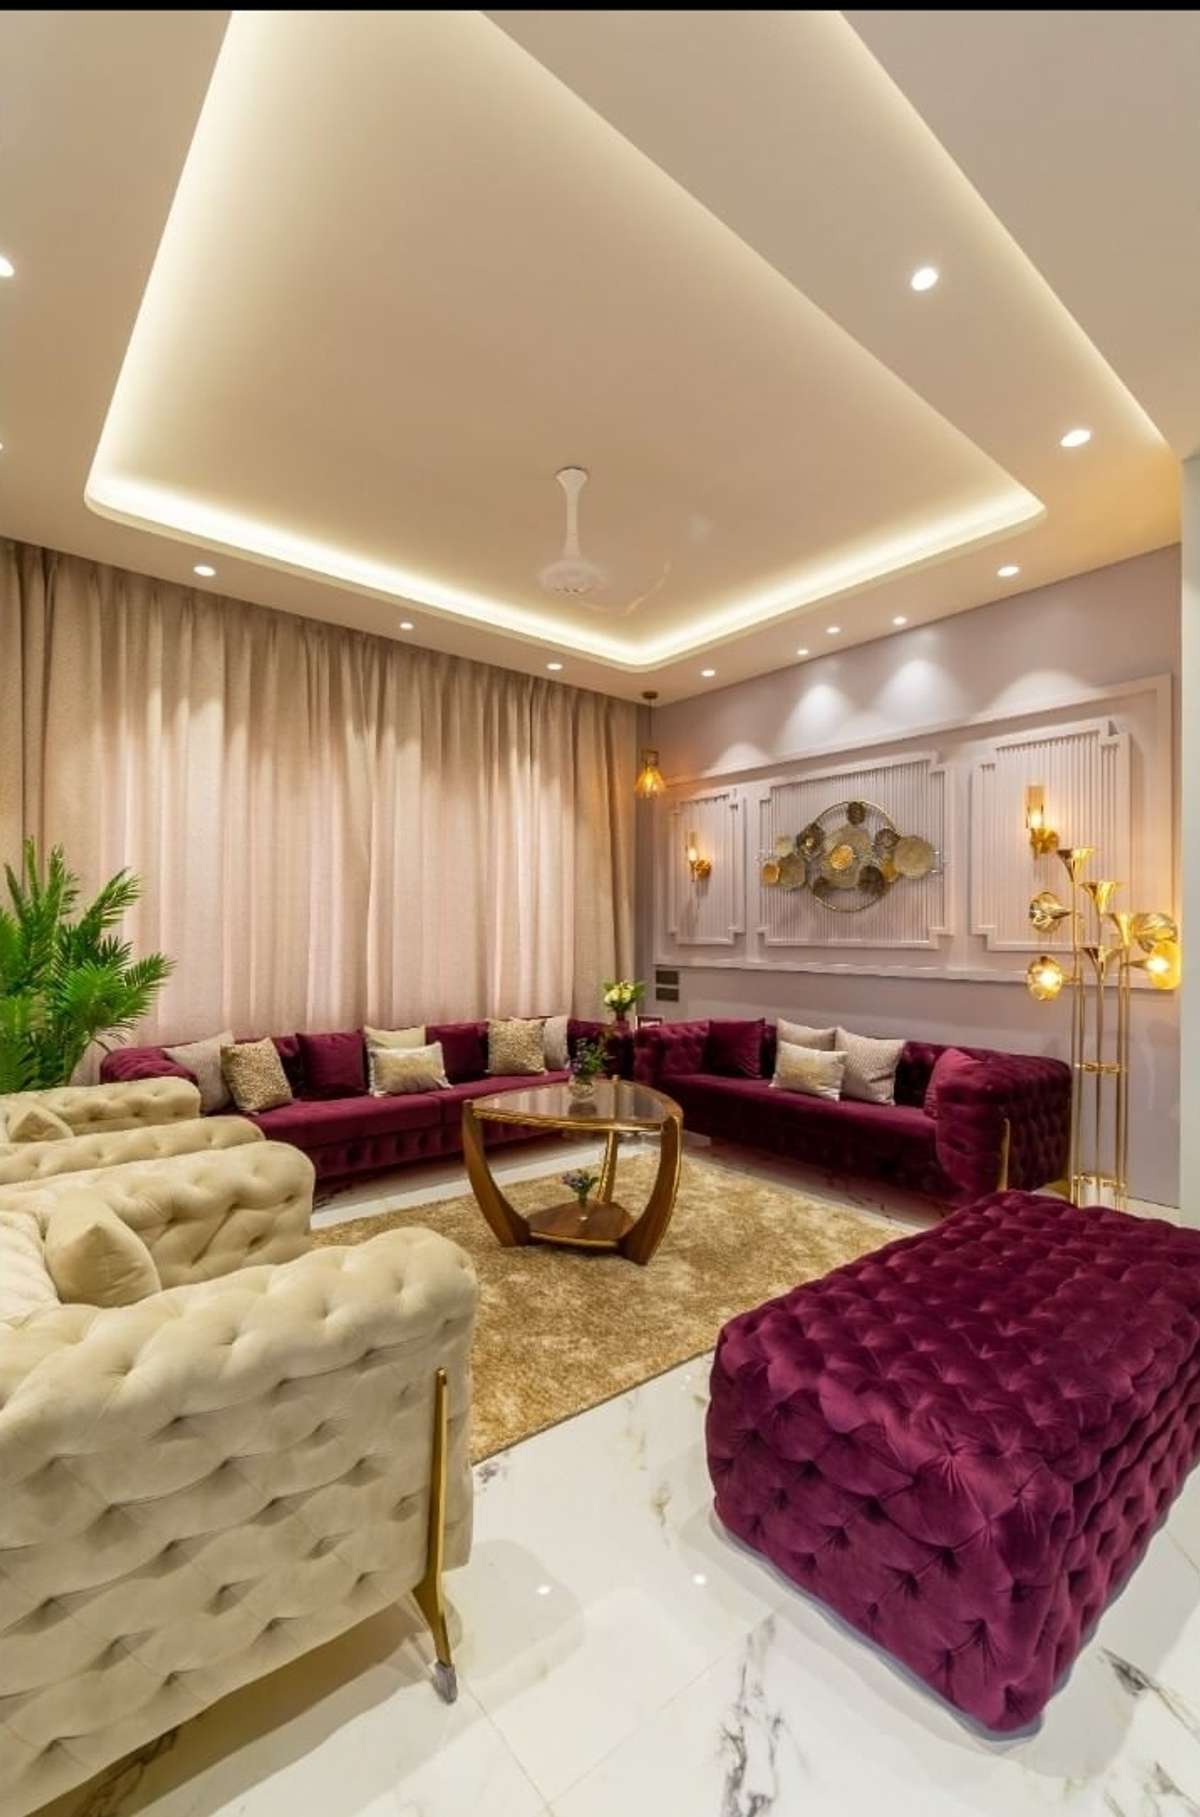 #LivingroomDesigns #InteriorDesigner #GraniteFloors